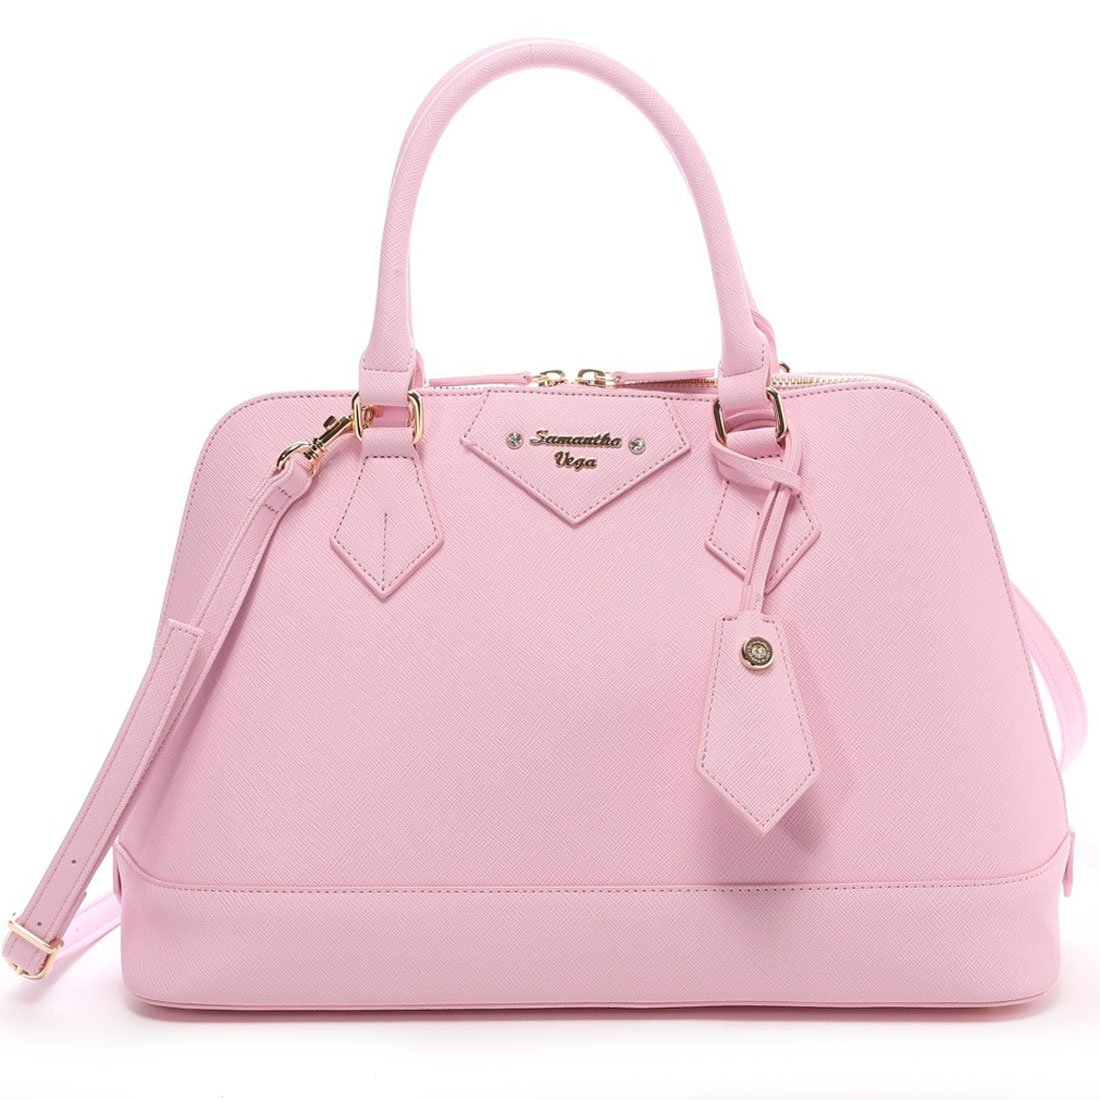 Samantha Vega Lady Azel Hand Bag Shoulder Baby Pink B5thavasa Japan Limited New